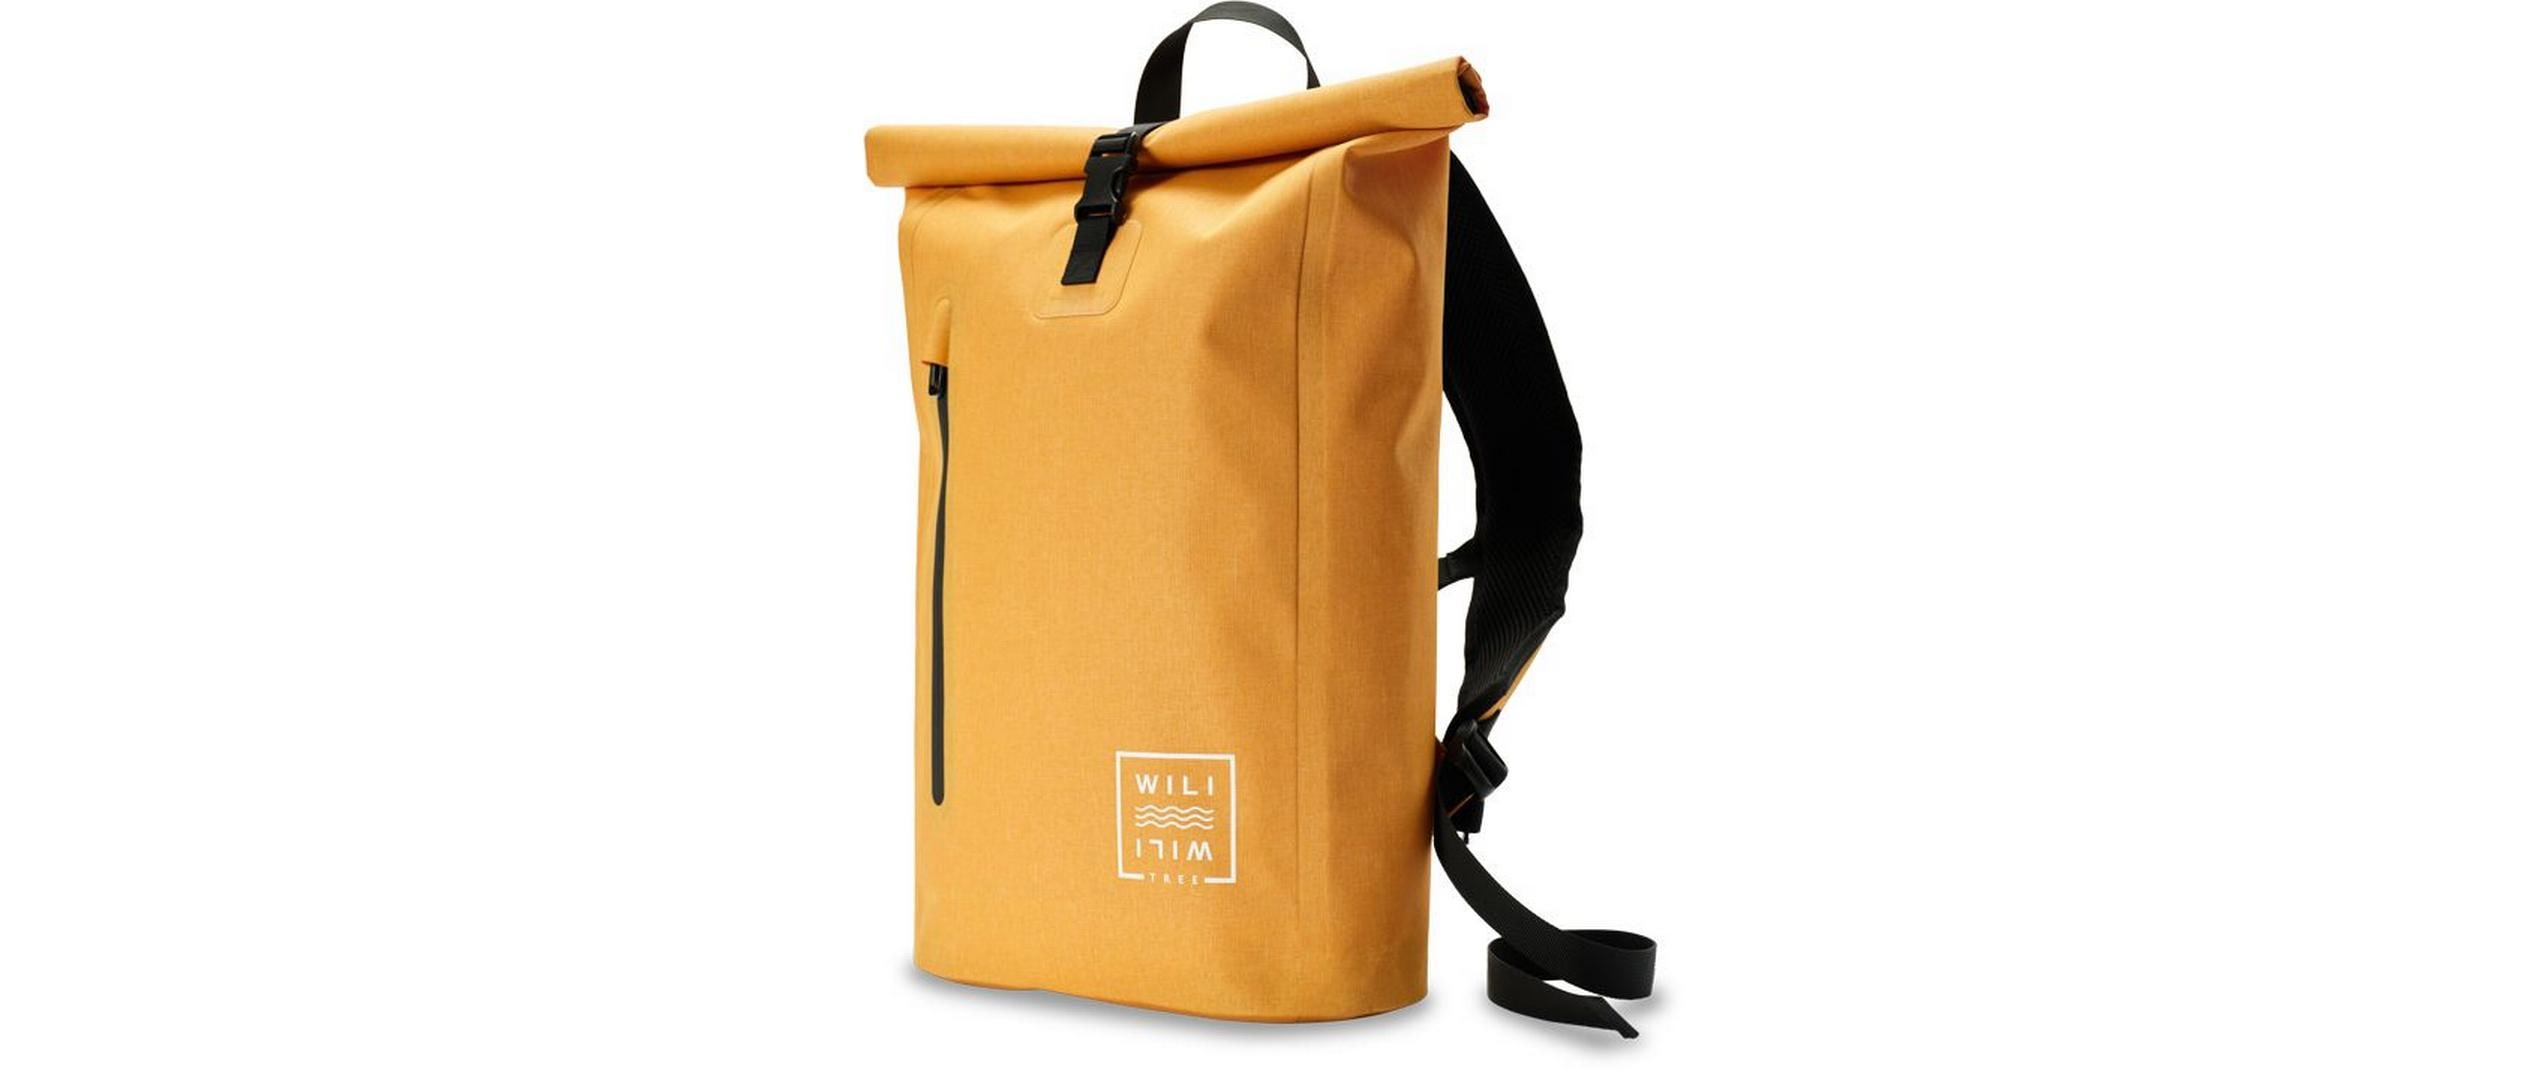 Wili Wili Tree Rucksack Roll Top Lite Backpack Sunset Yellow, 20 l